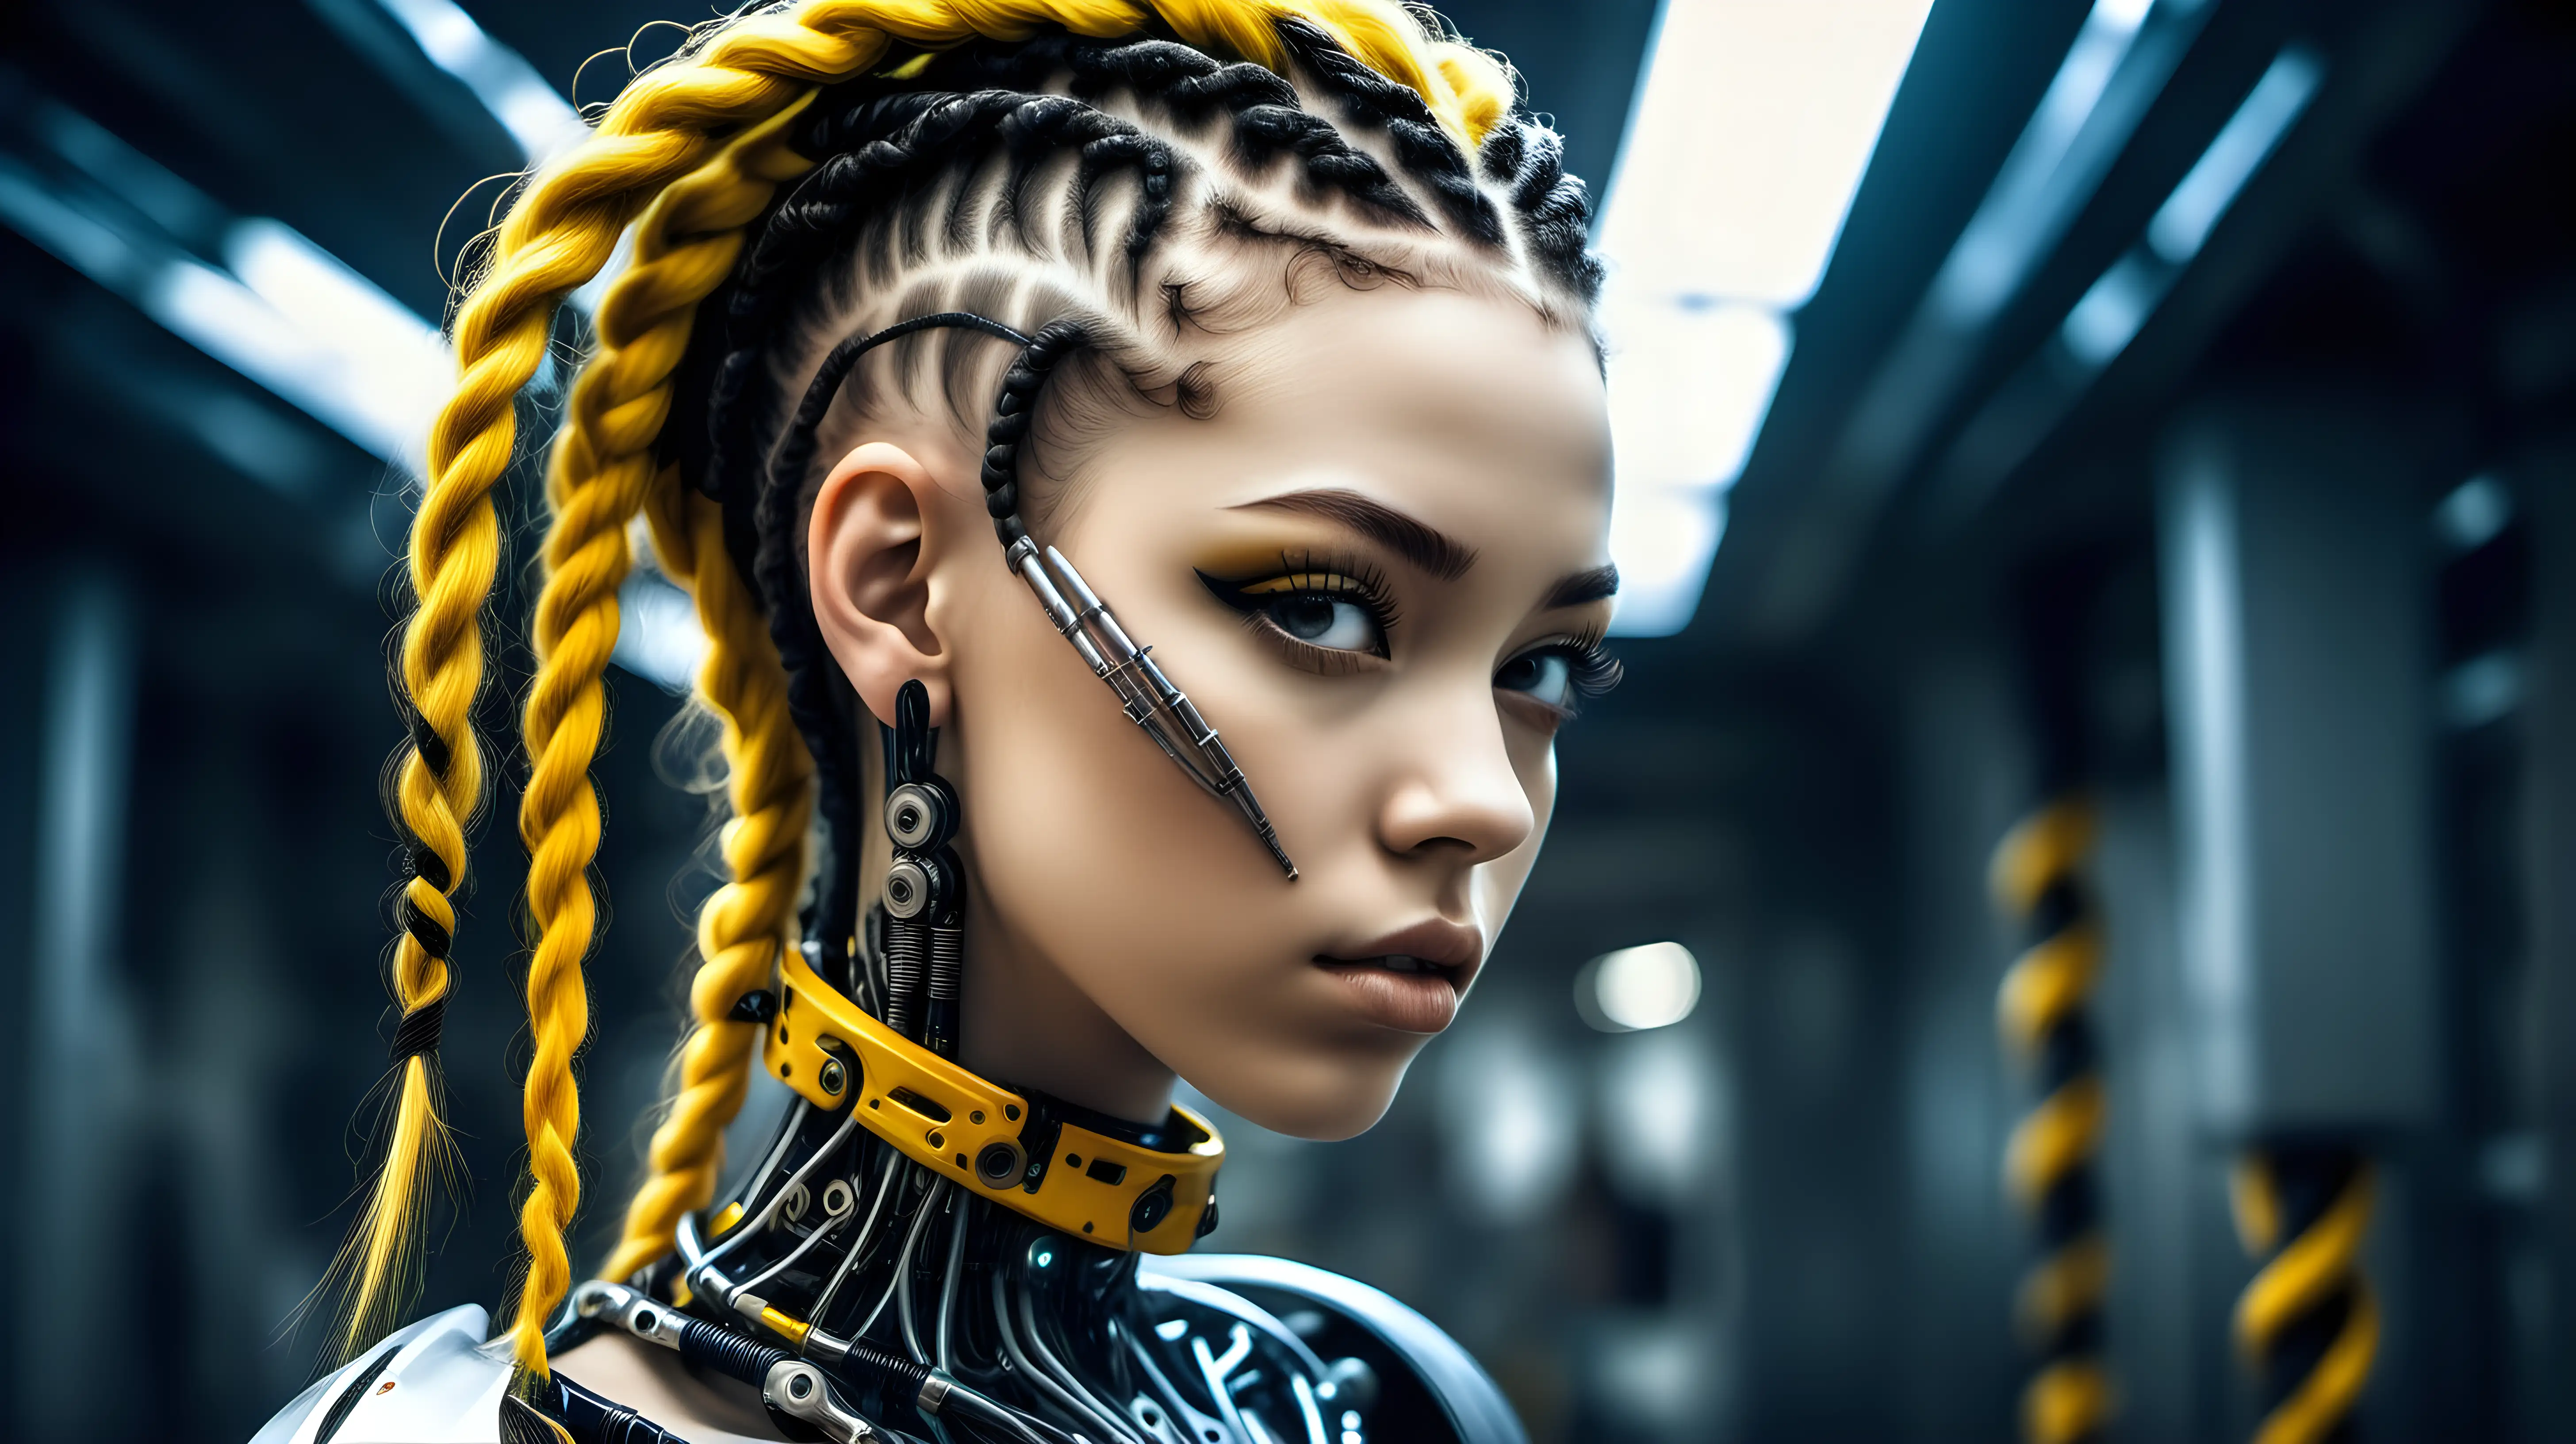 Futuristic Beauty Stunning 18YearOld European Cyborg with Wild Yellow and Black Braided Hair